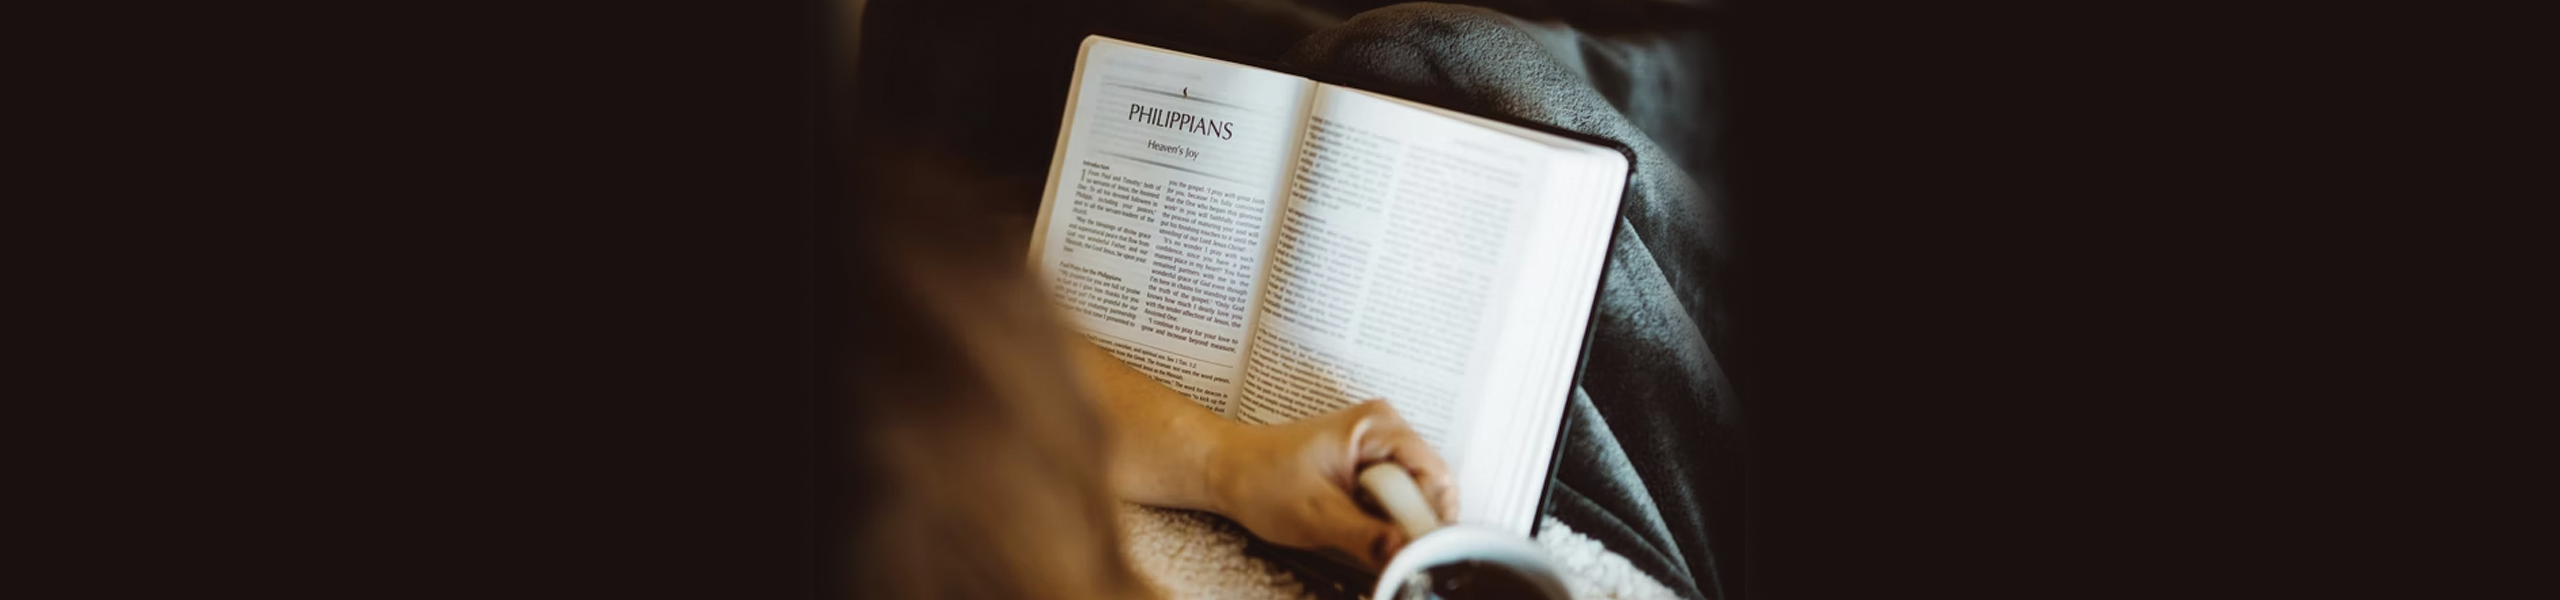 Look at the Book: Philippians | John Piper